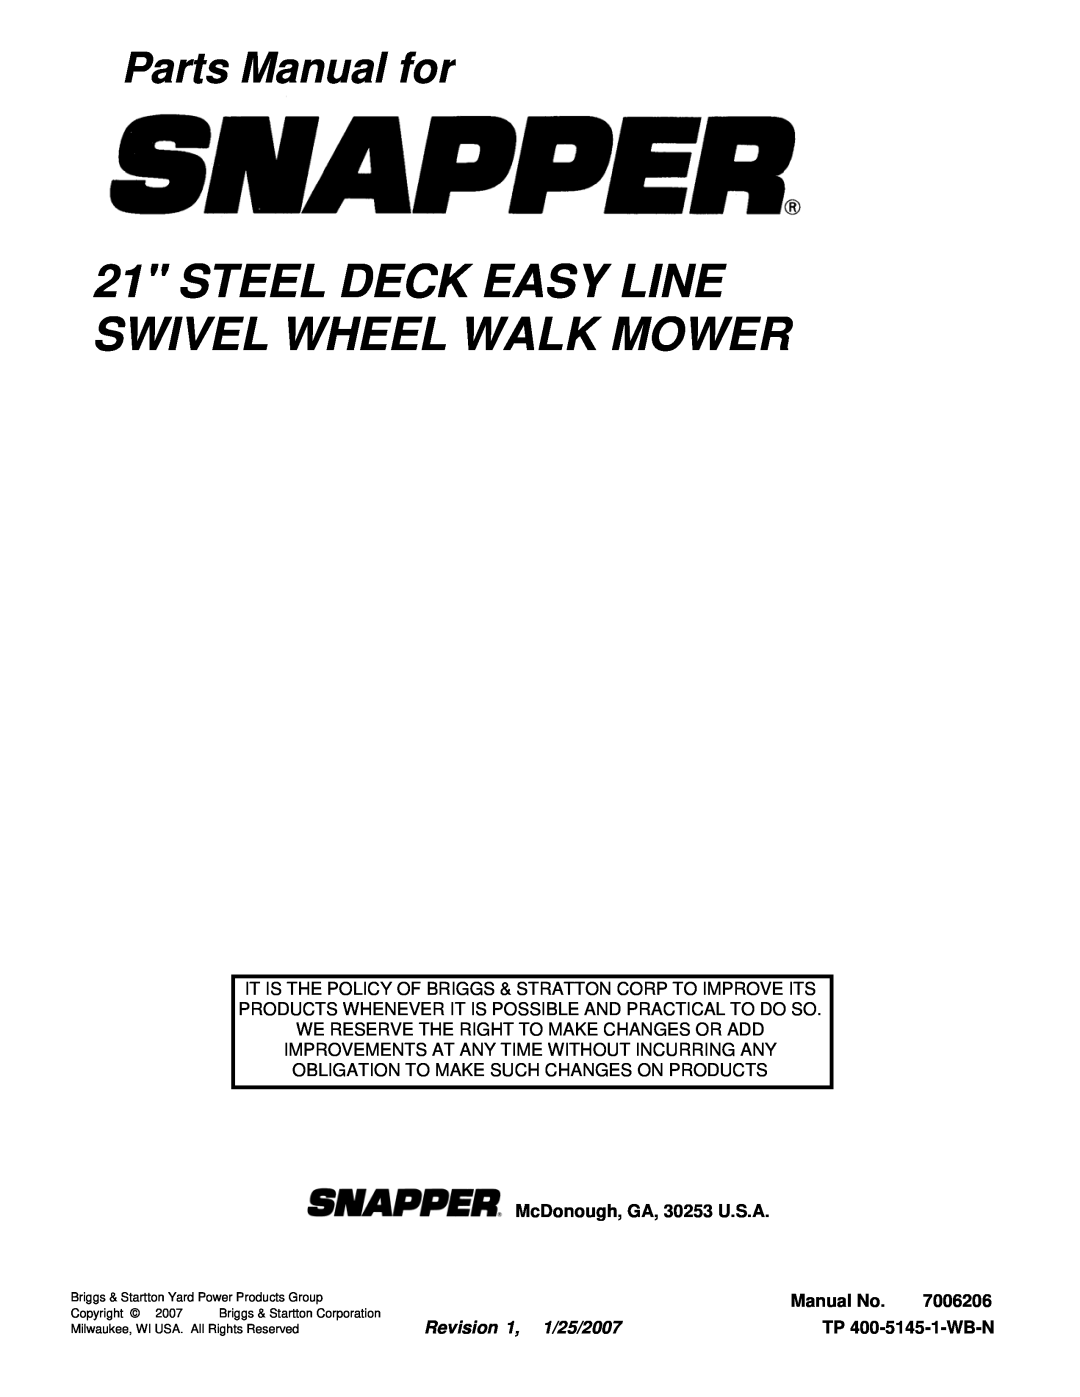 Snapper SPV211S Steel Deck Easy Line Swivel Wheel Walk Mower, Parts Manual for, McDonough, GA, 30253 U.S.A, Manual No 